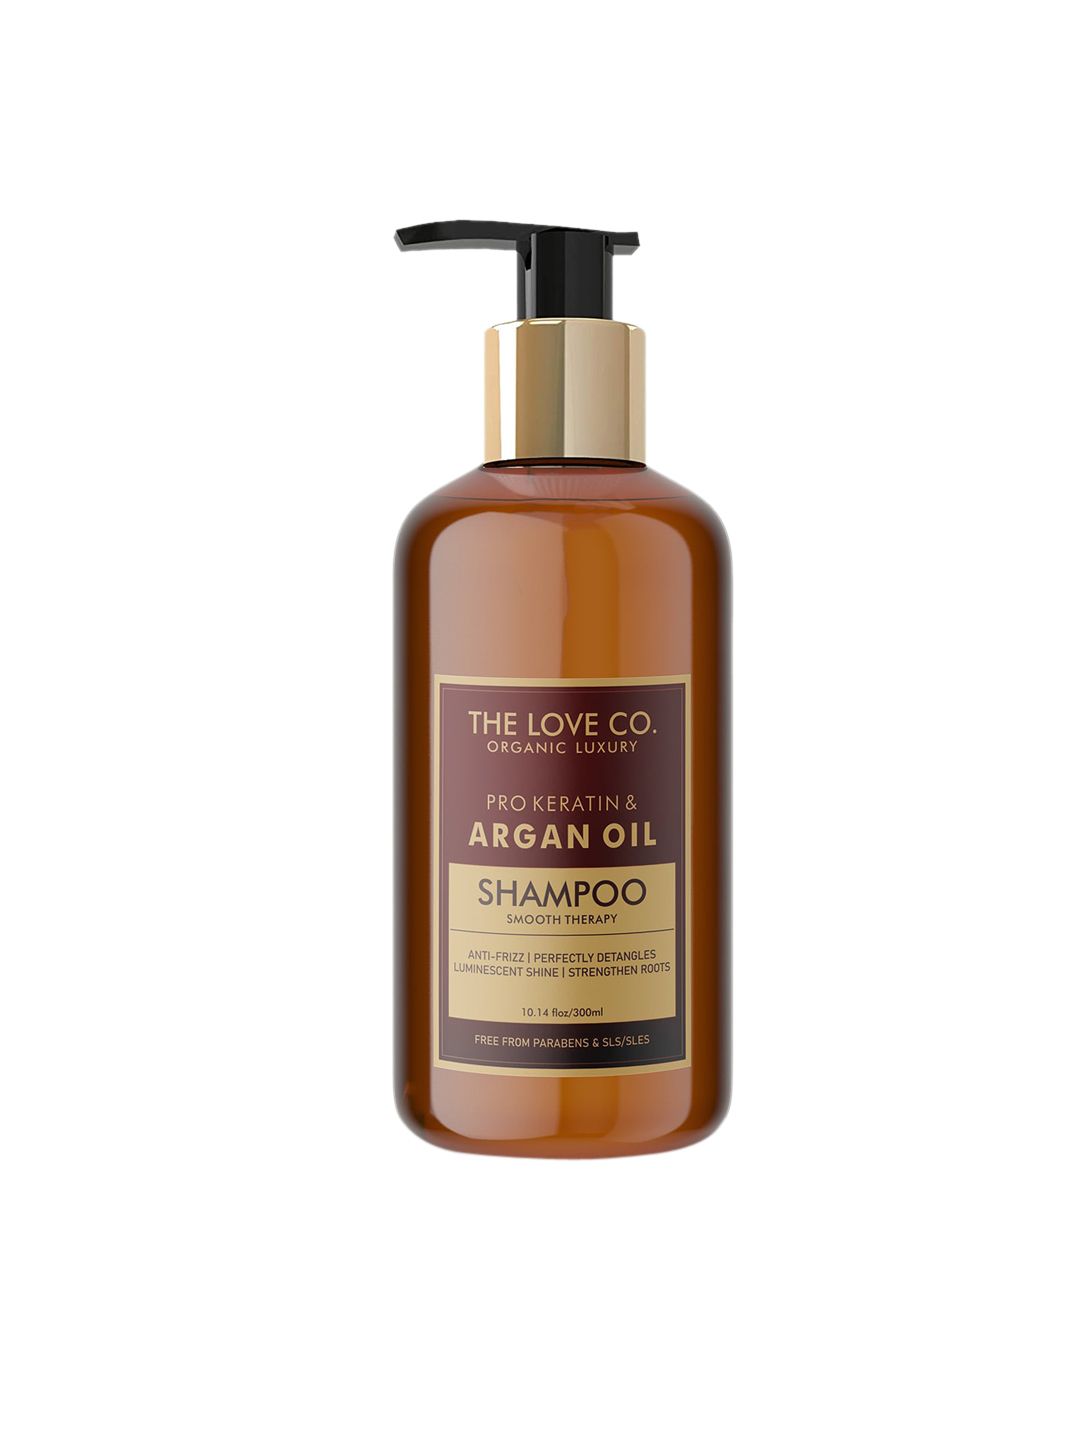 THE LOVE CO. Pro Keratin & Moroccan Argan Oil Shampoo with Biotin 300 ml Price in India